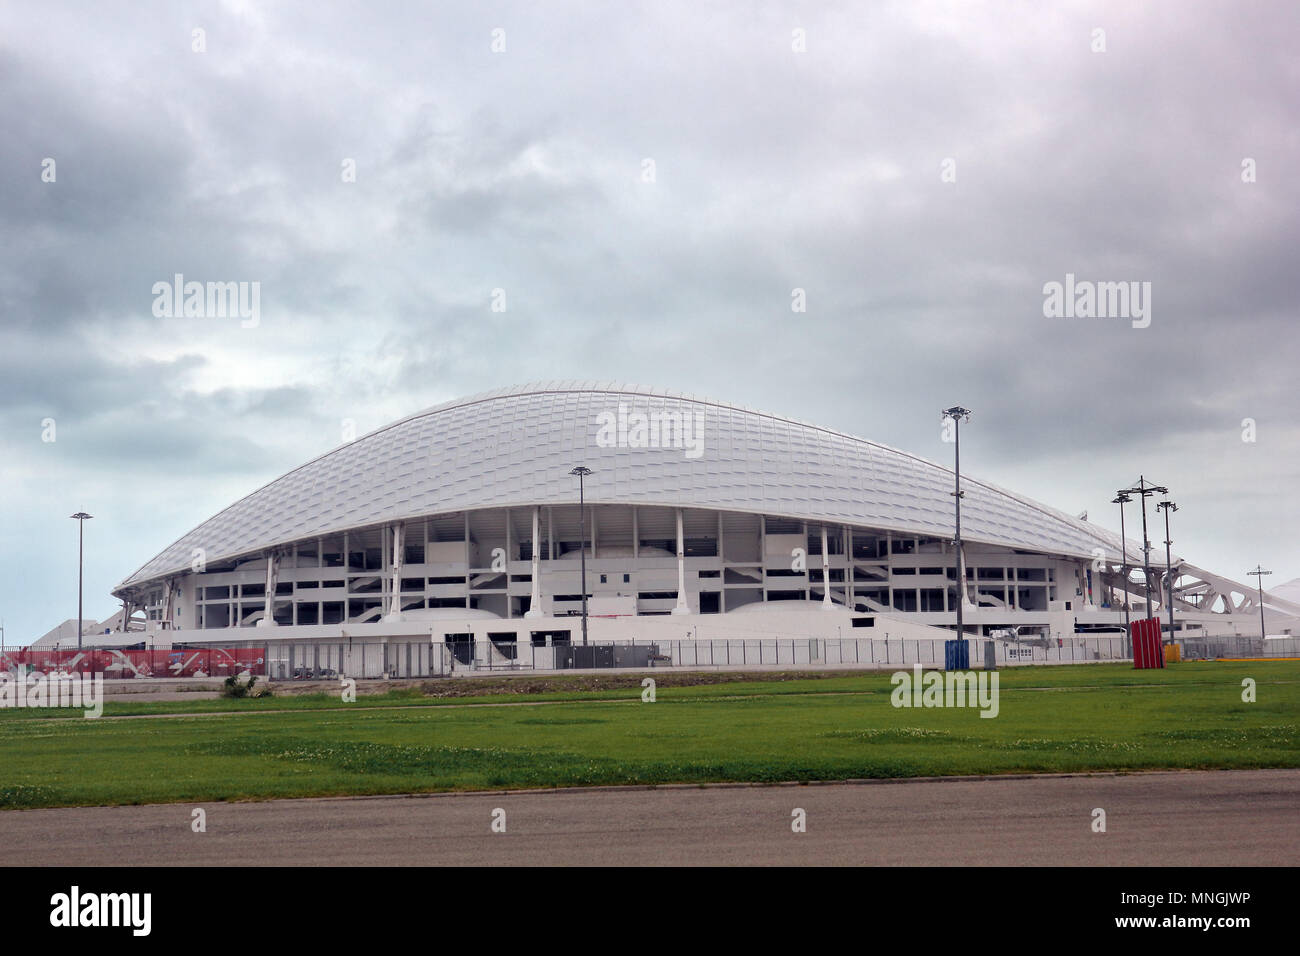 Sochi Fisht arena cloudy day horizontal photo Stock Photo